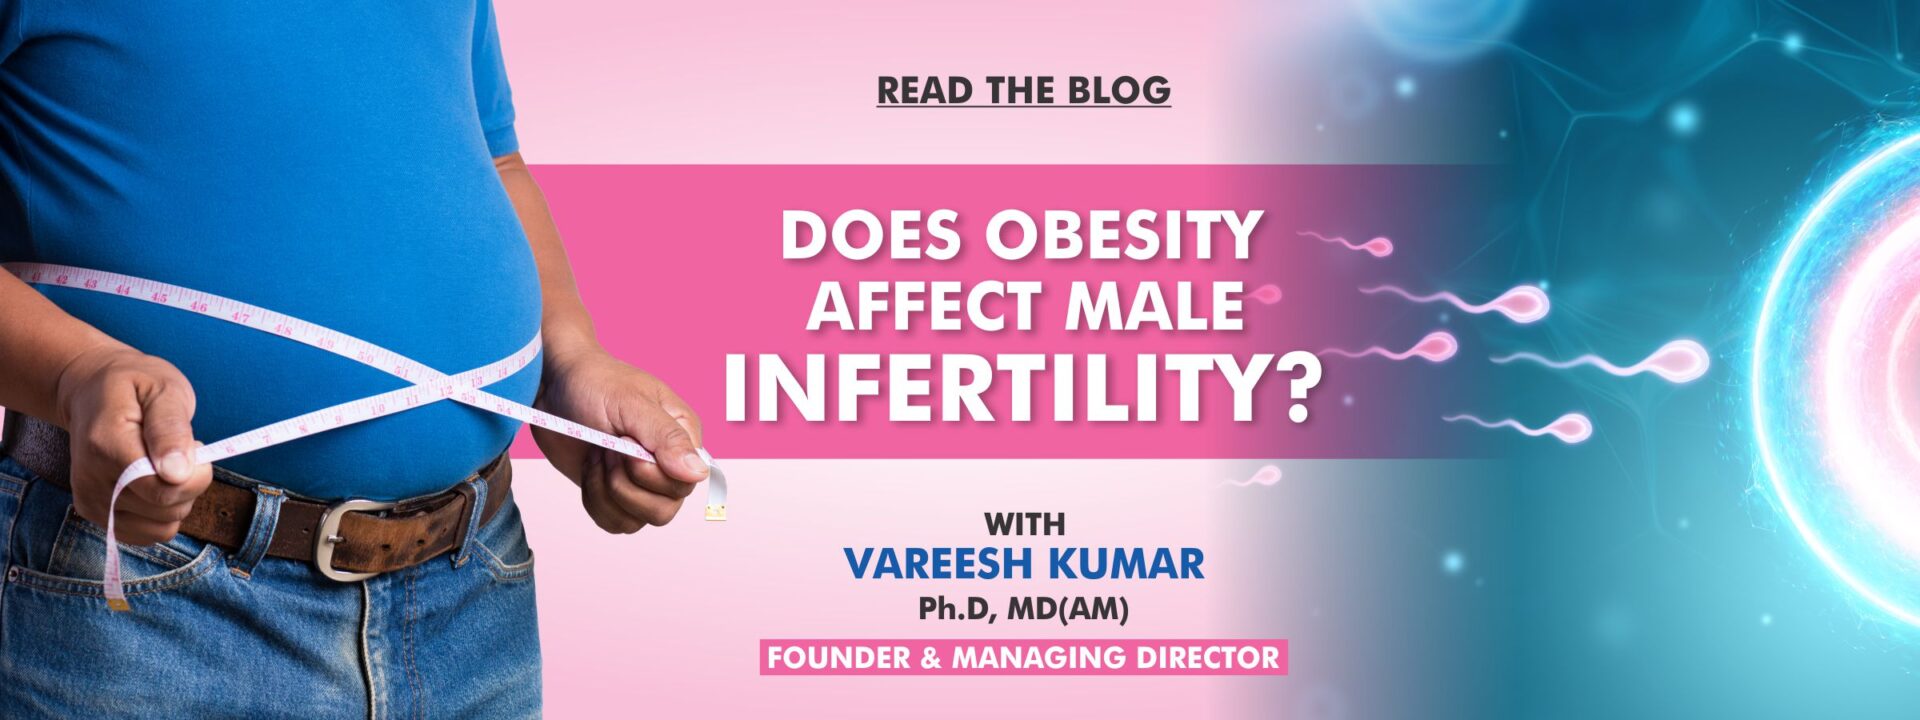 obesity affect male infertility